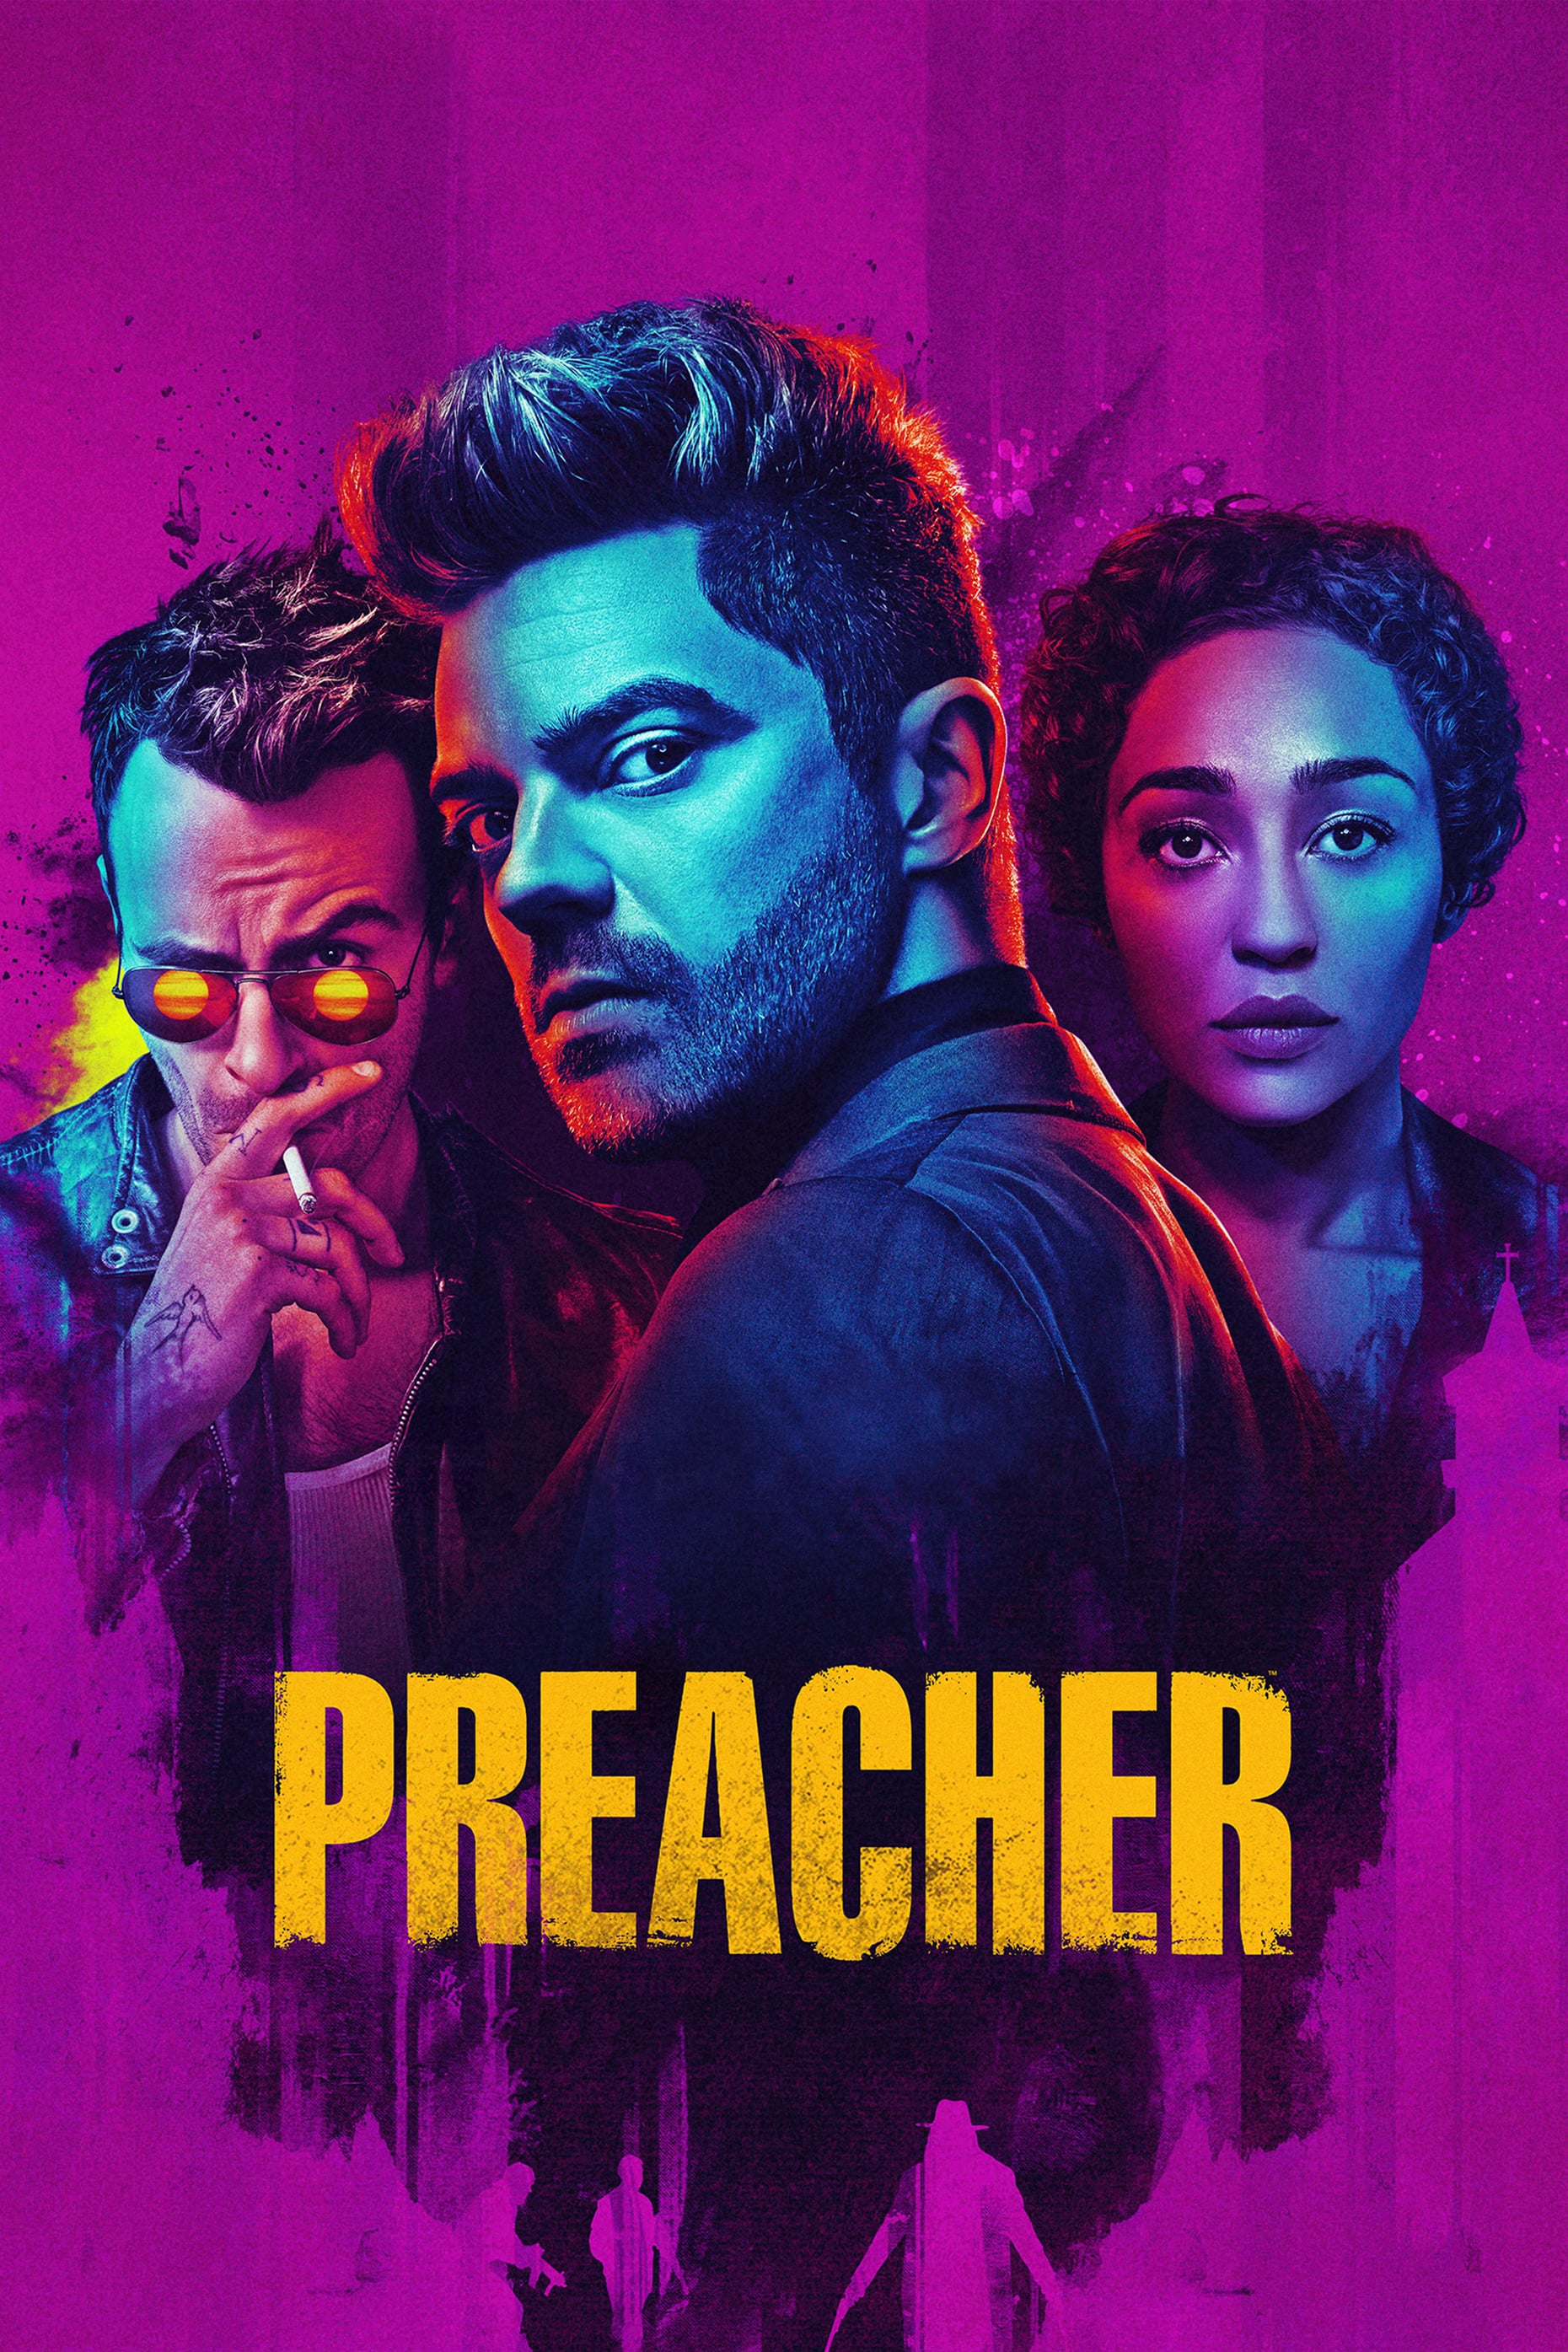 Preacher rating